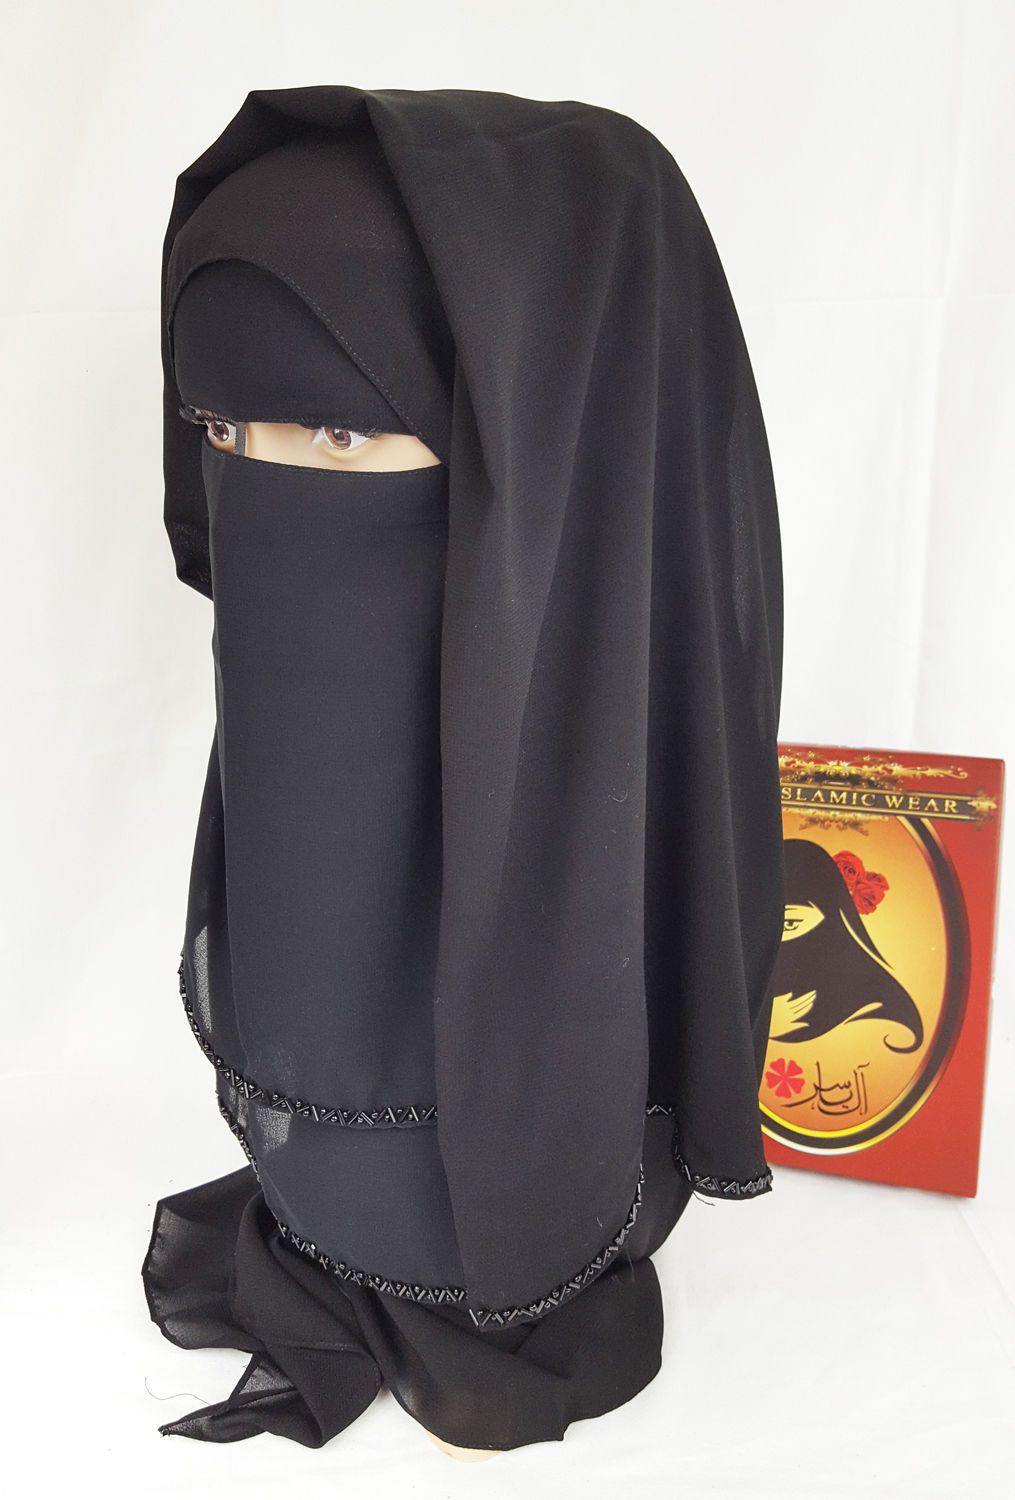 Premium Quality Women 2-PCS Black Niqab Scarf Set Hijab Jilbab Abaya IslamWear - Arabian Shopping Zone